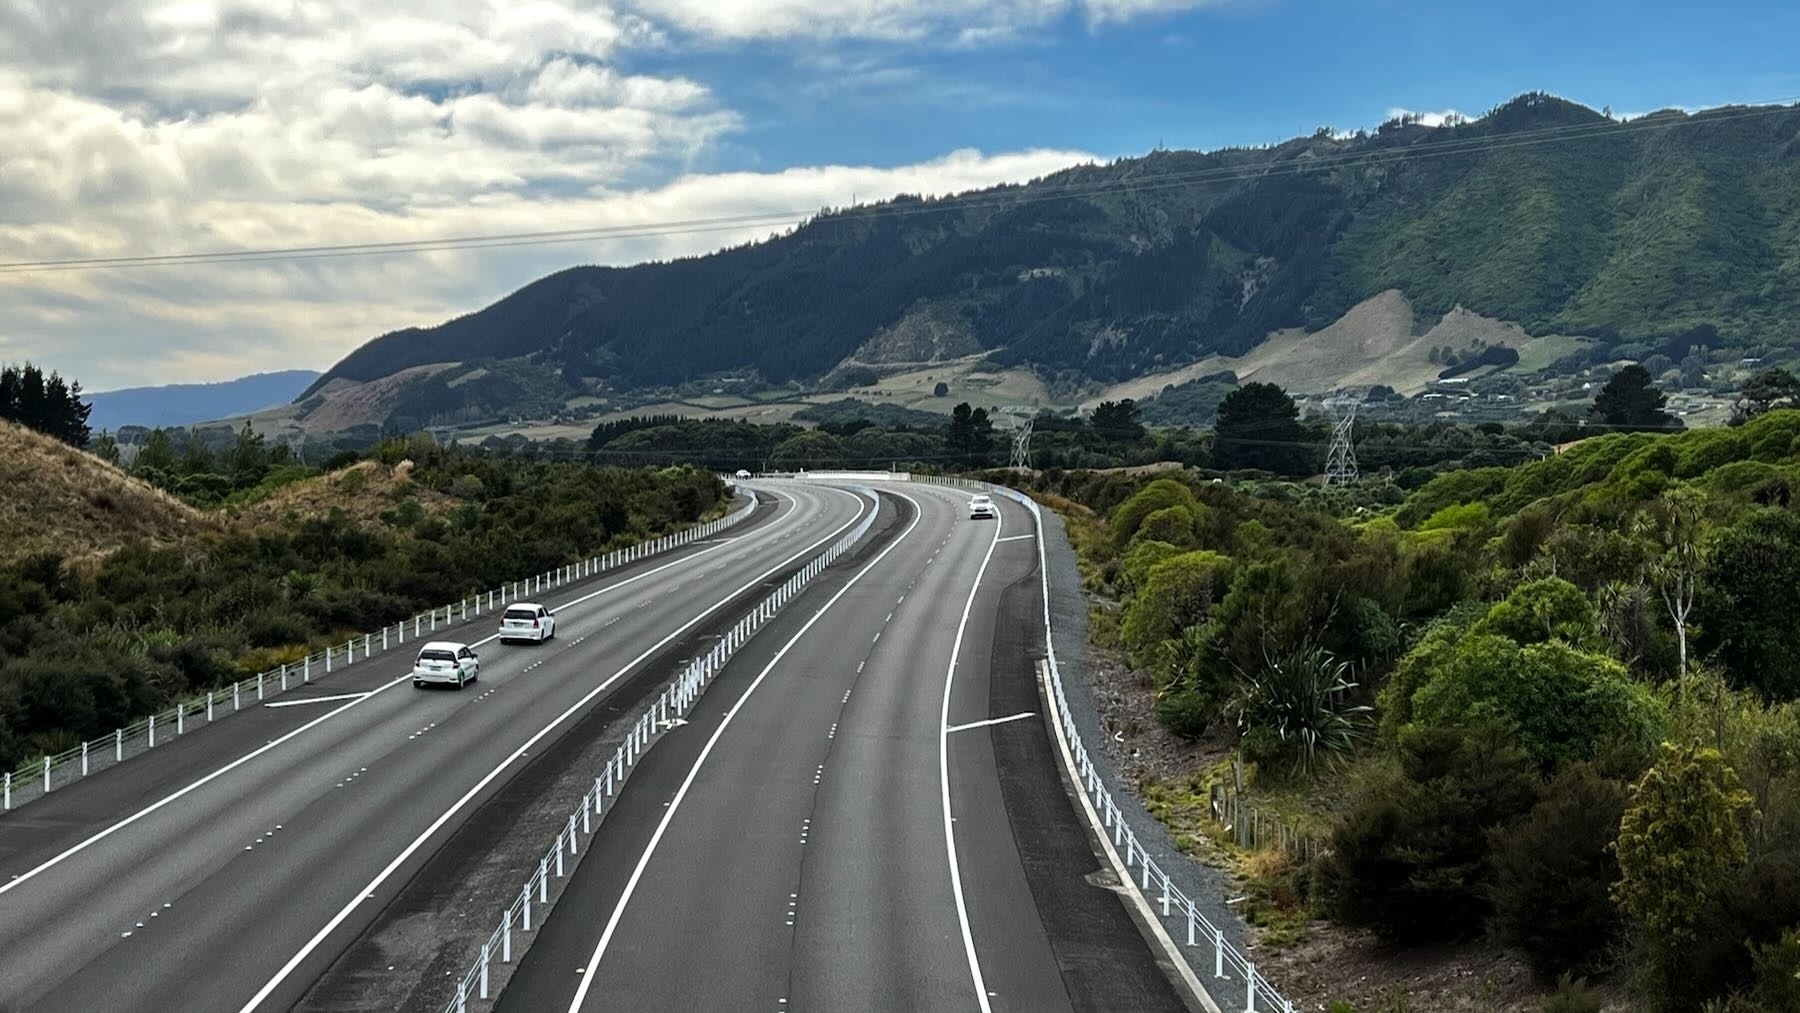 Kāpiti Expressway from an overbridge. 